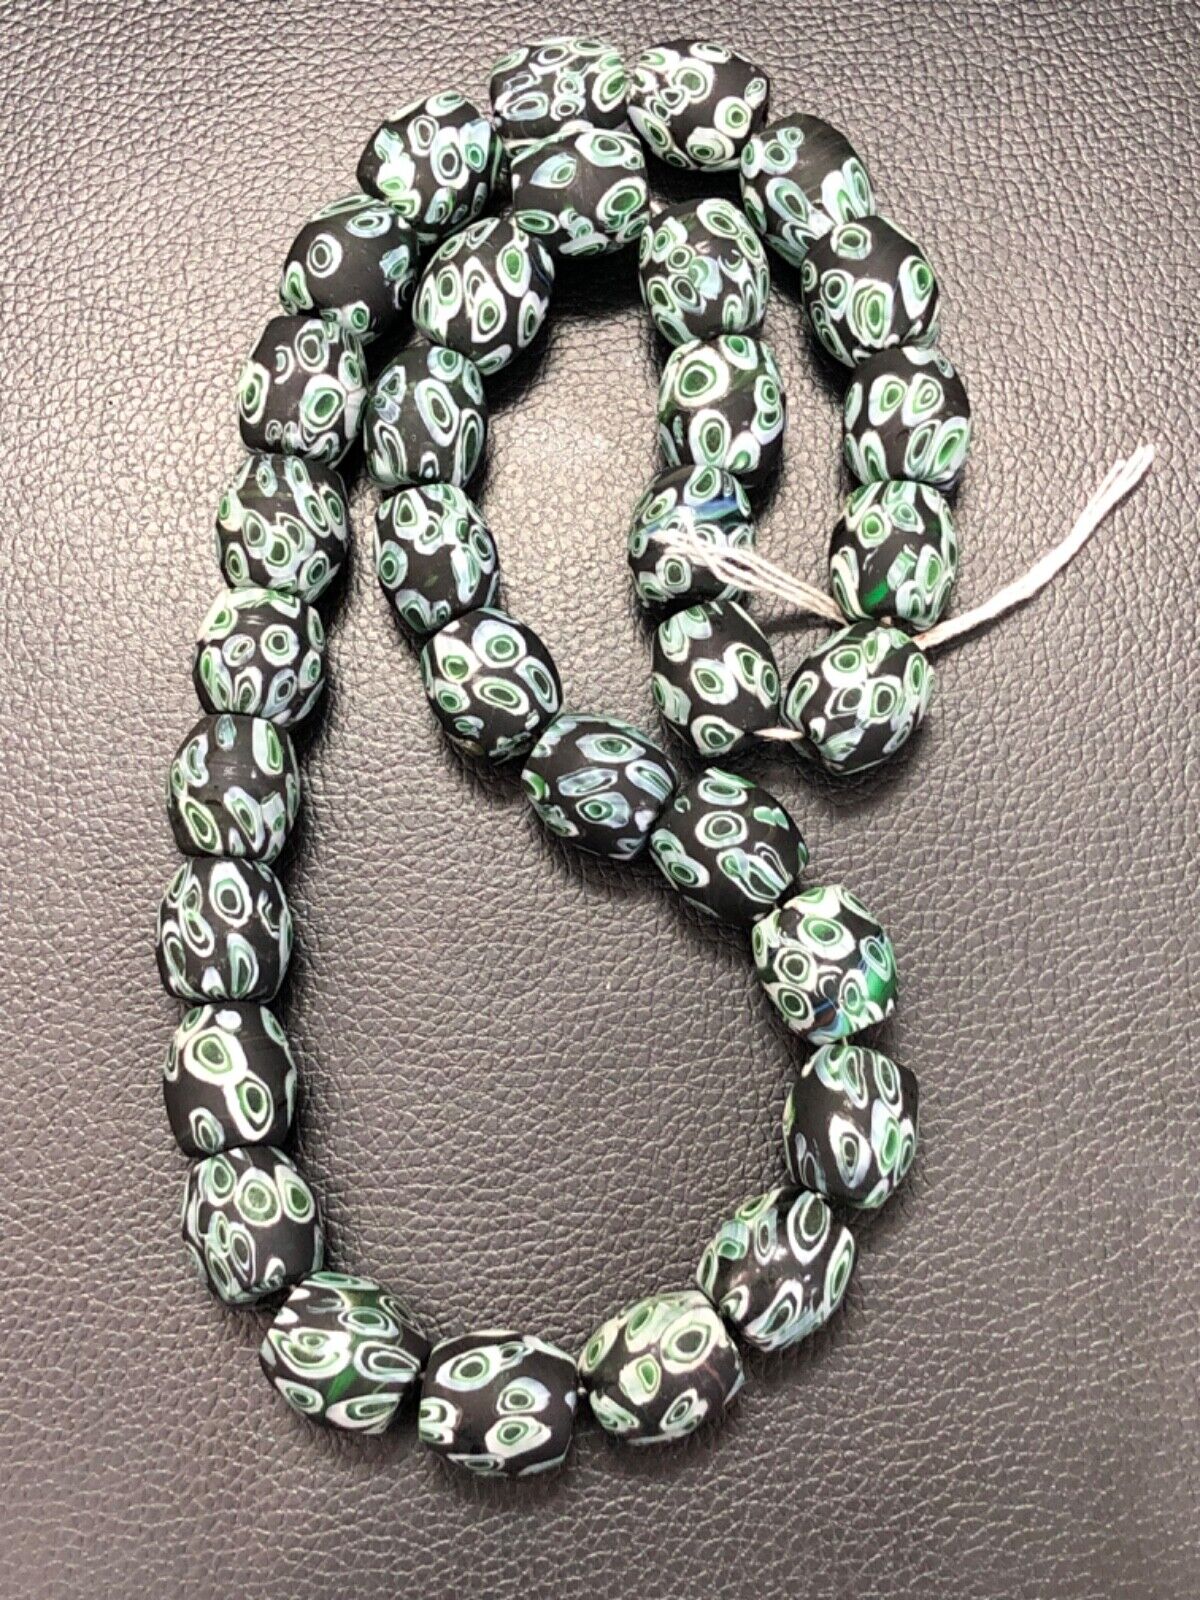 Impressive Vintage Venetian African Green Chevron Glass Beads 19mm Long Strand